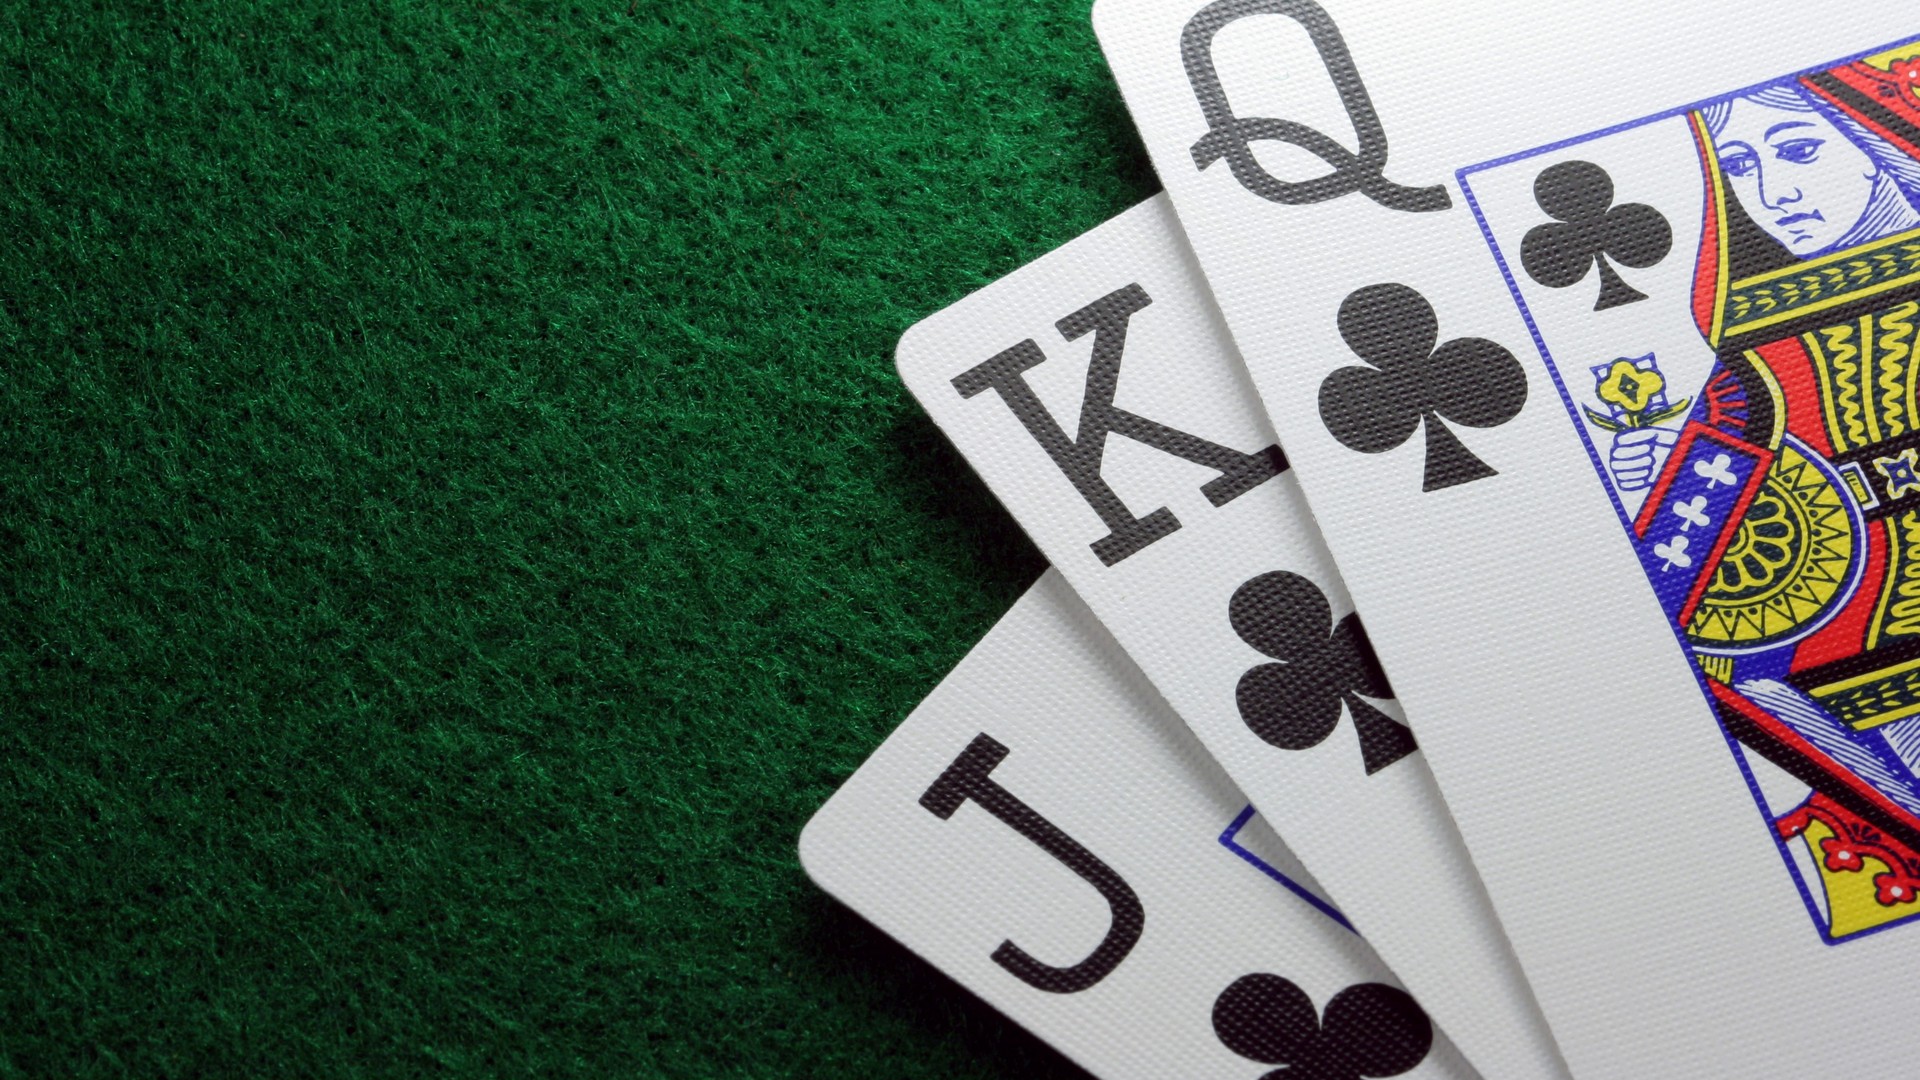 King Queen Jack - Magic Card Trick 